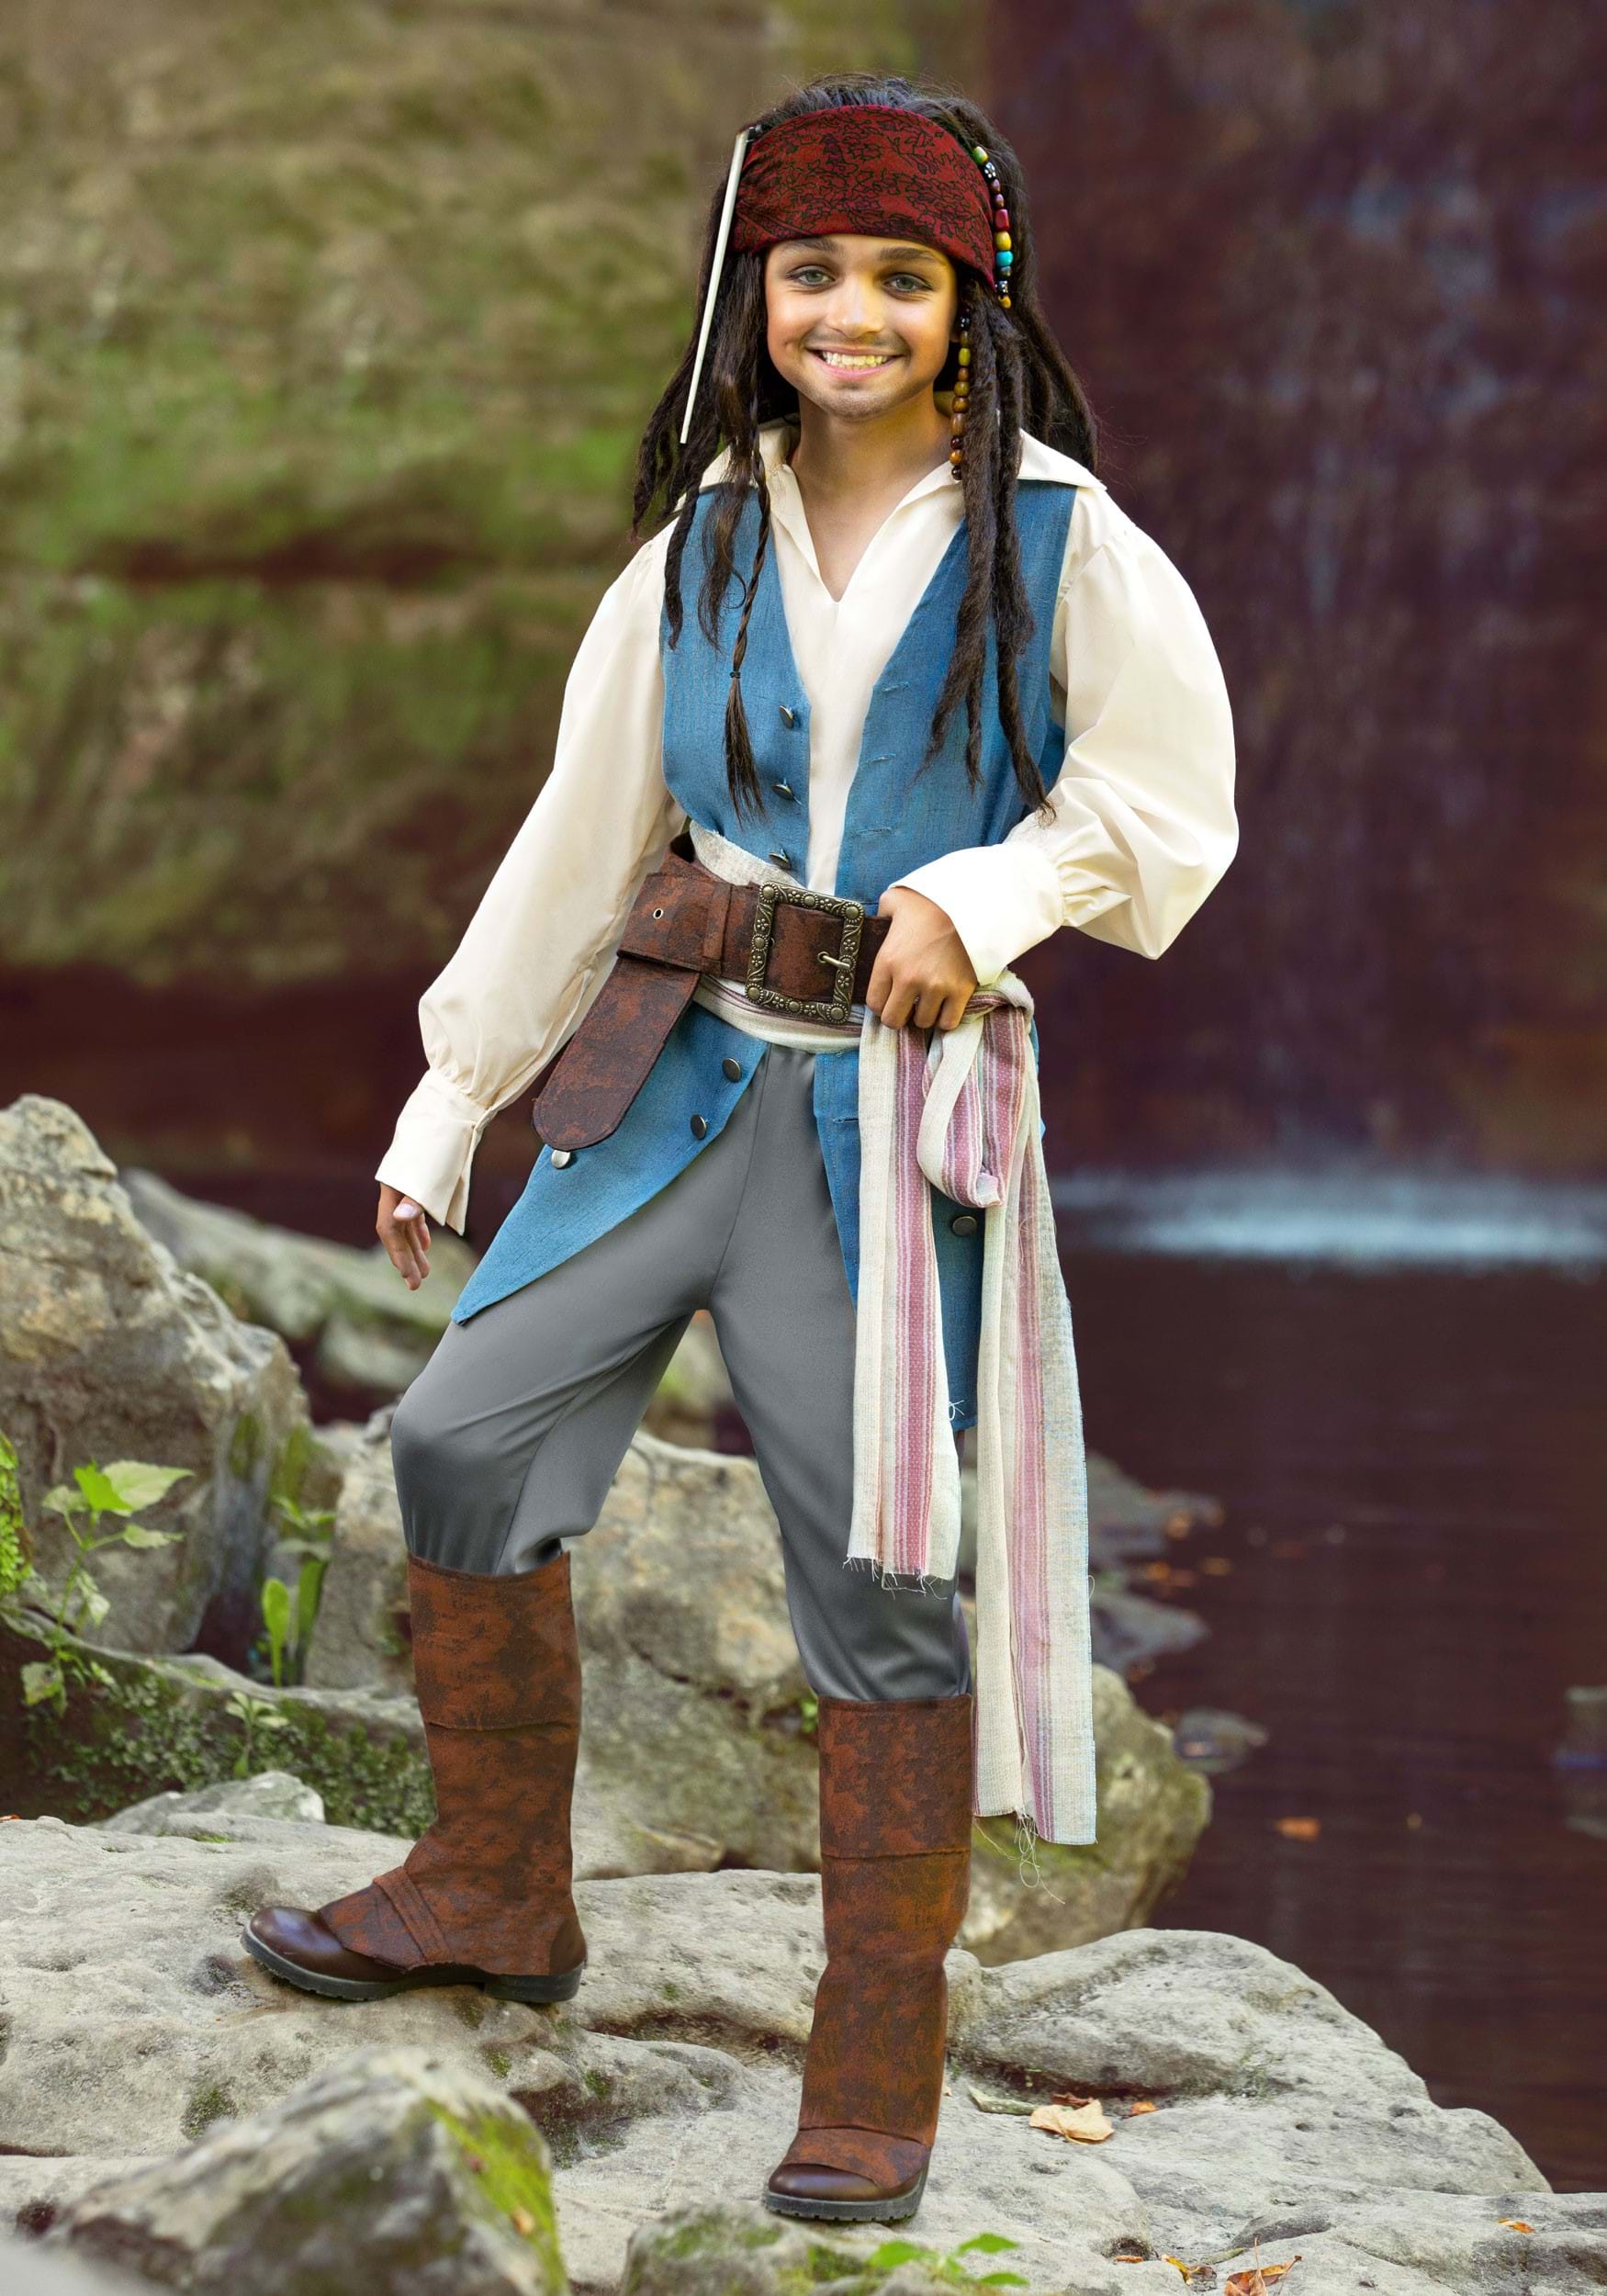 Jack Sparrow Inspired Compass, Jack Sparrow Costume, Jack Sparrow